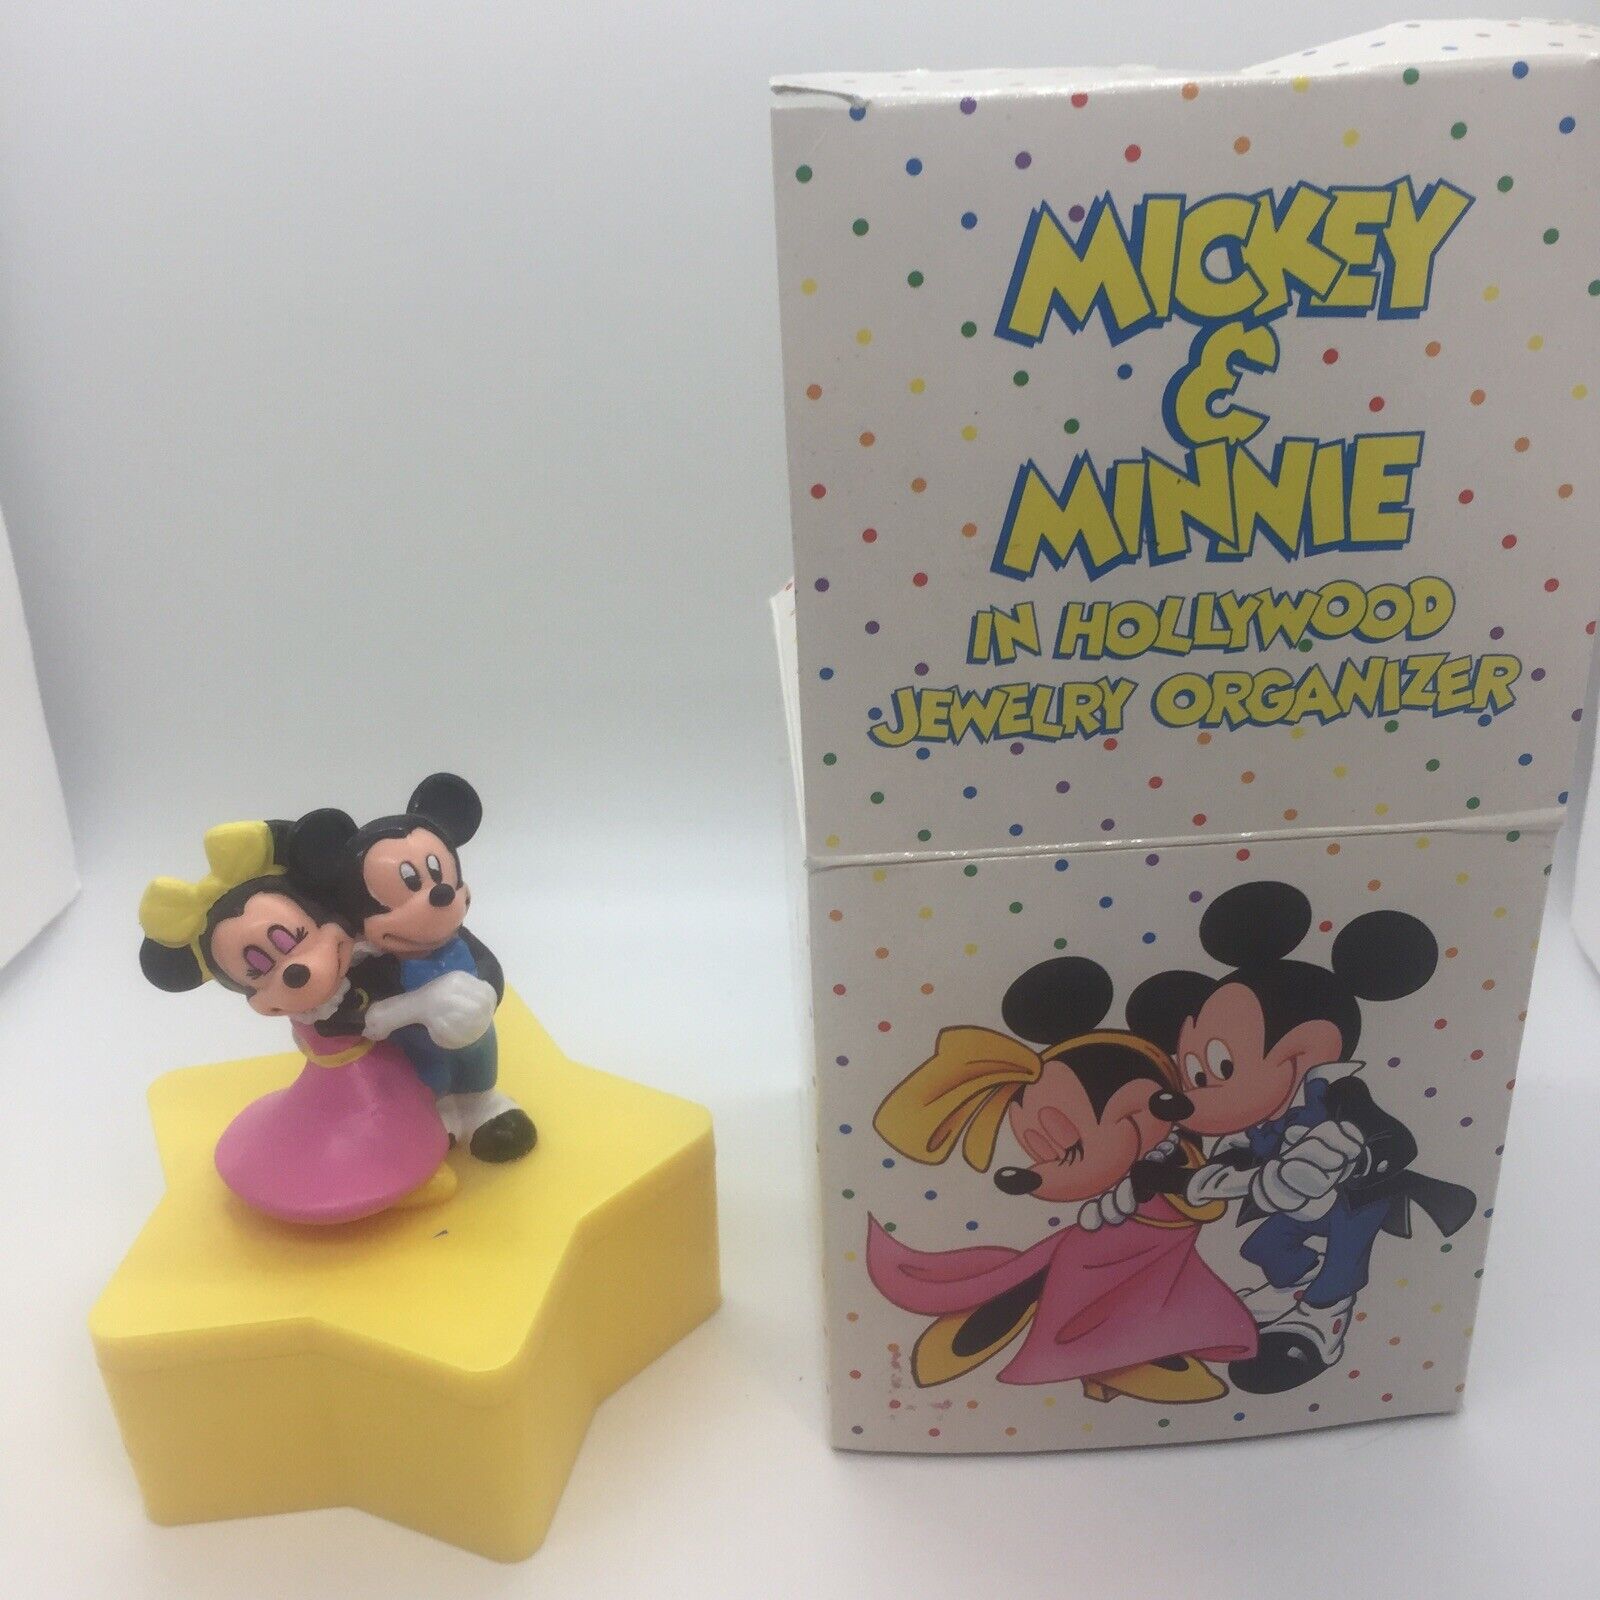 Mickey & Minnie in Hollywood Avon Jewelry organizer in original box 1989 